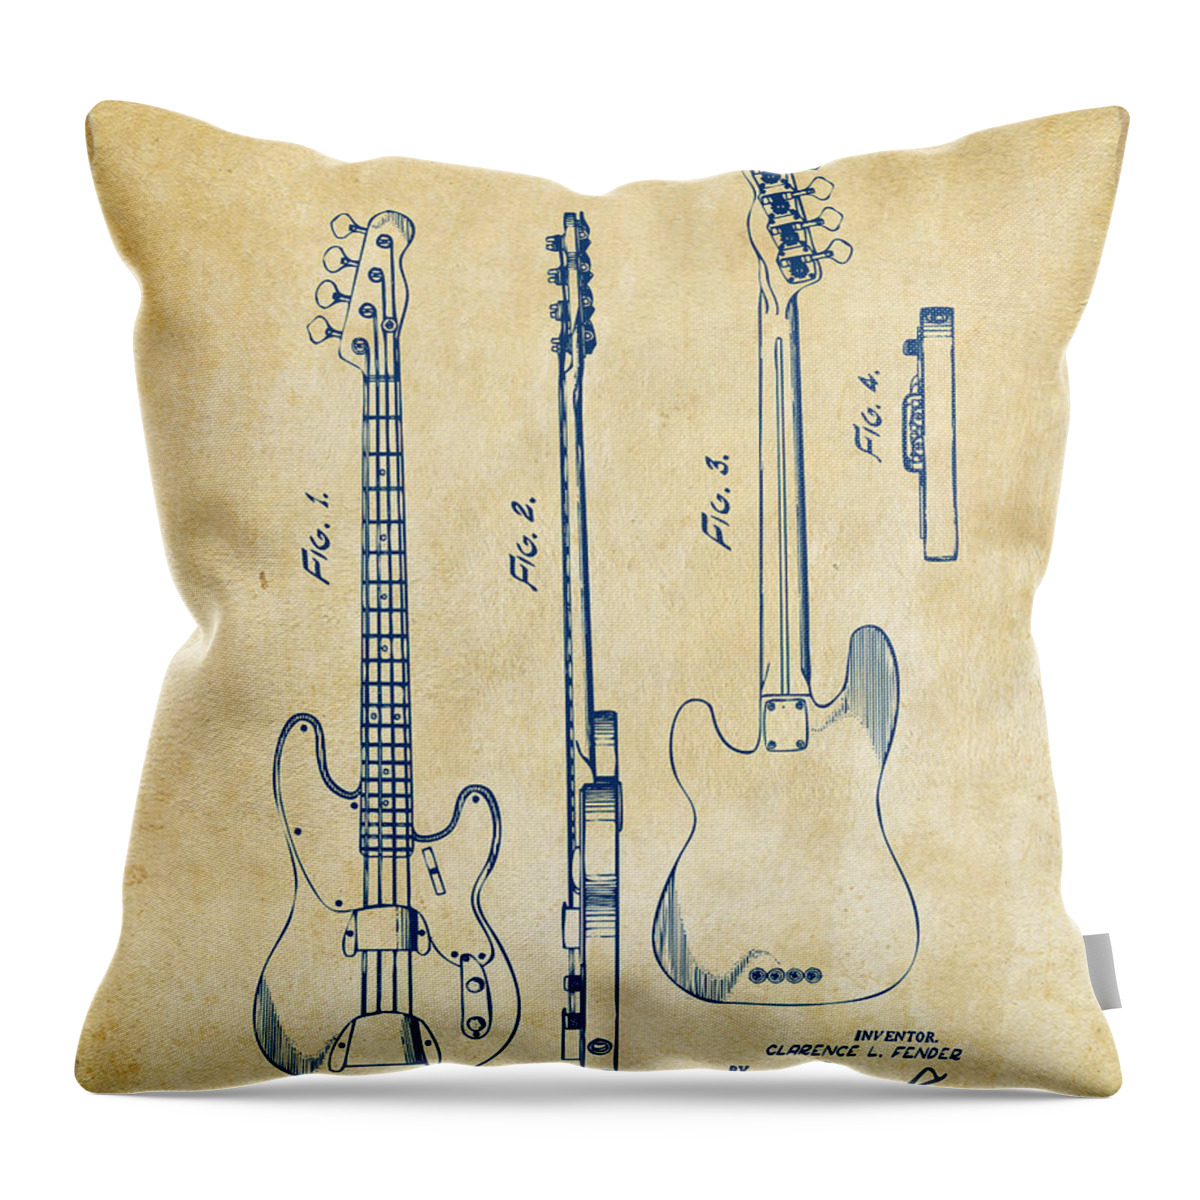 Fender Guitar Throw Pillow featuring the digital art 1953 Fender Bass Guitar Patent Artwork - Vintage by Nikki Marie Smith